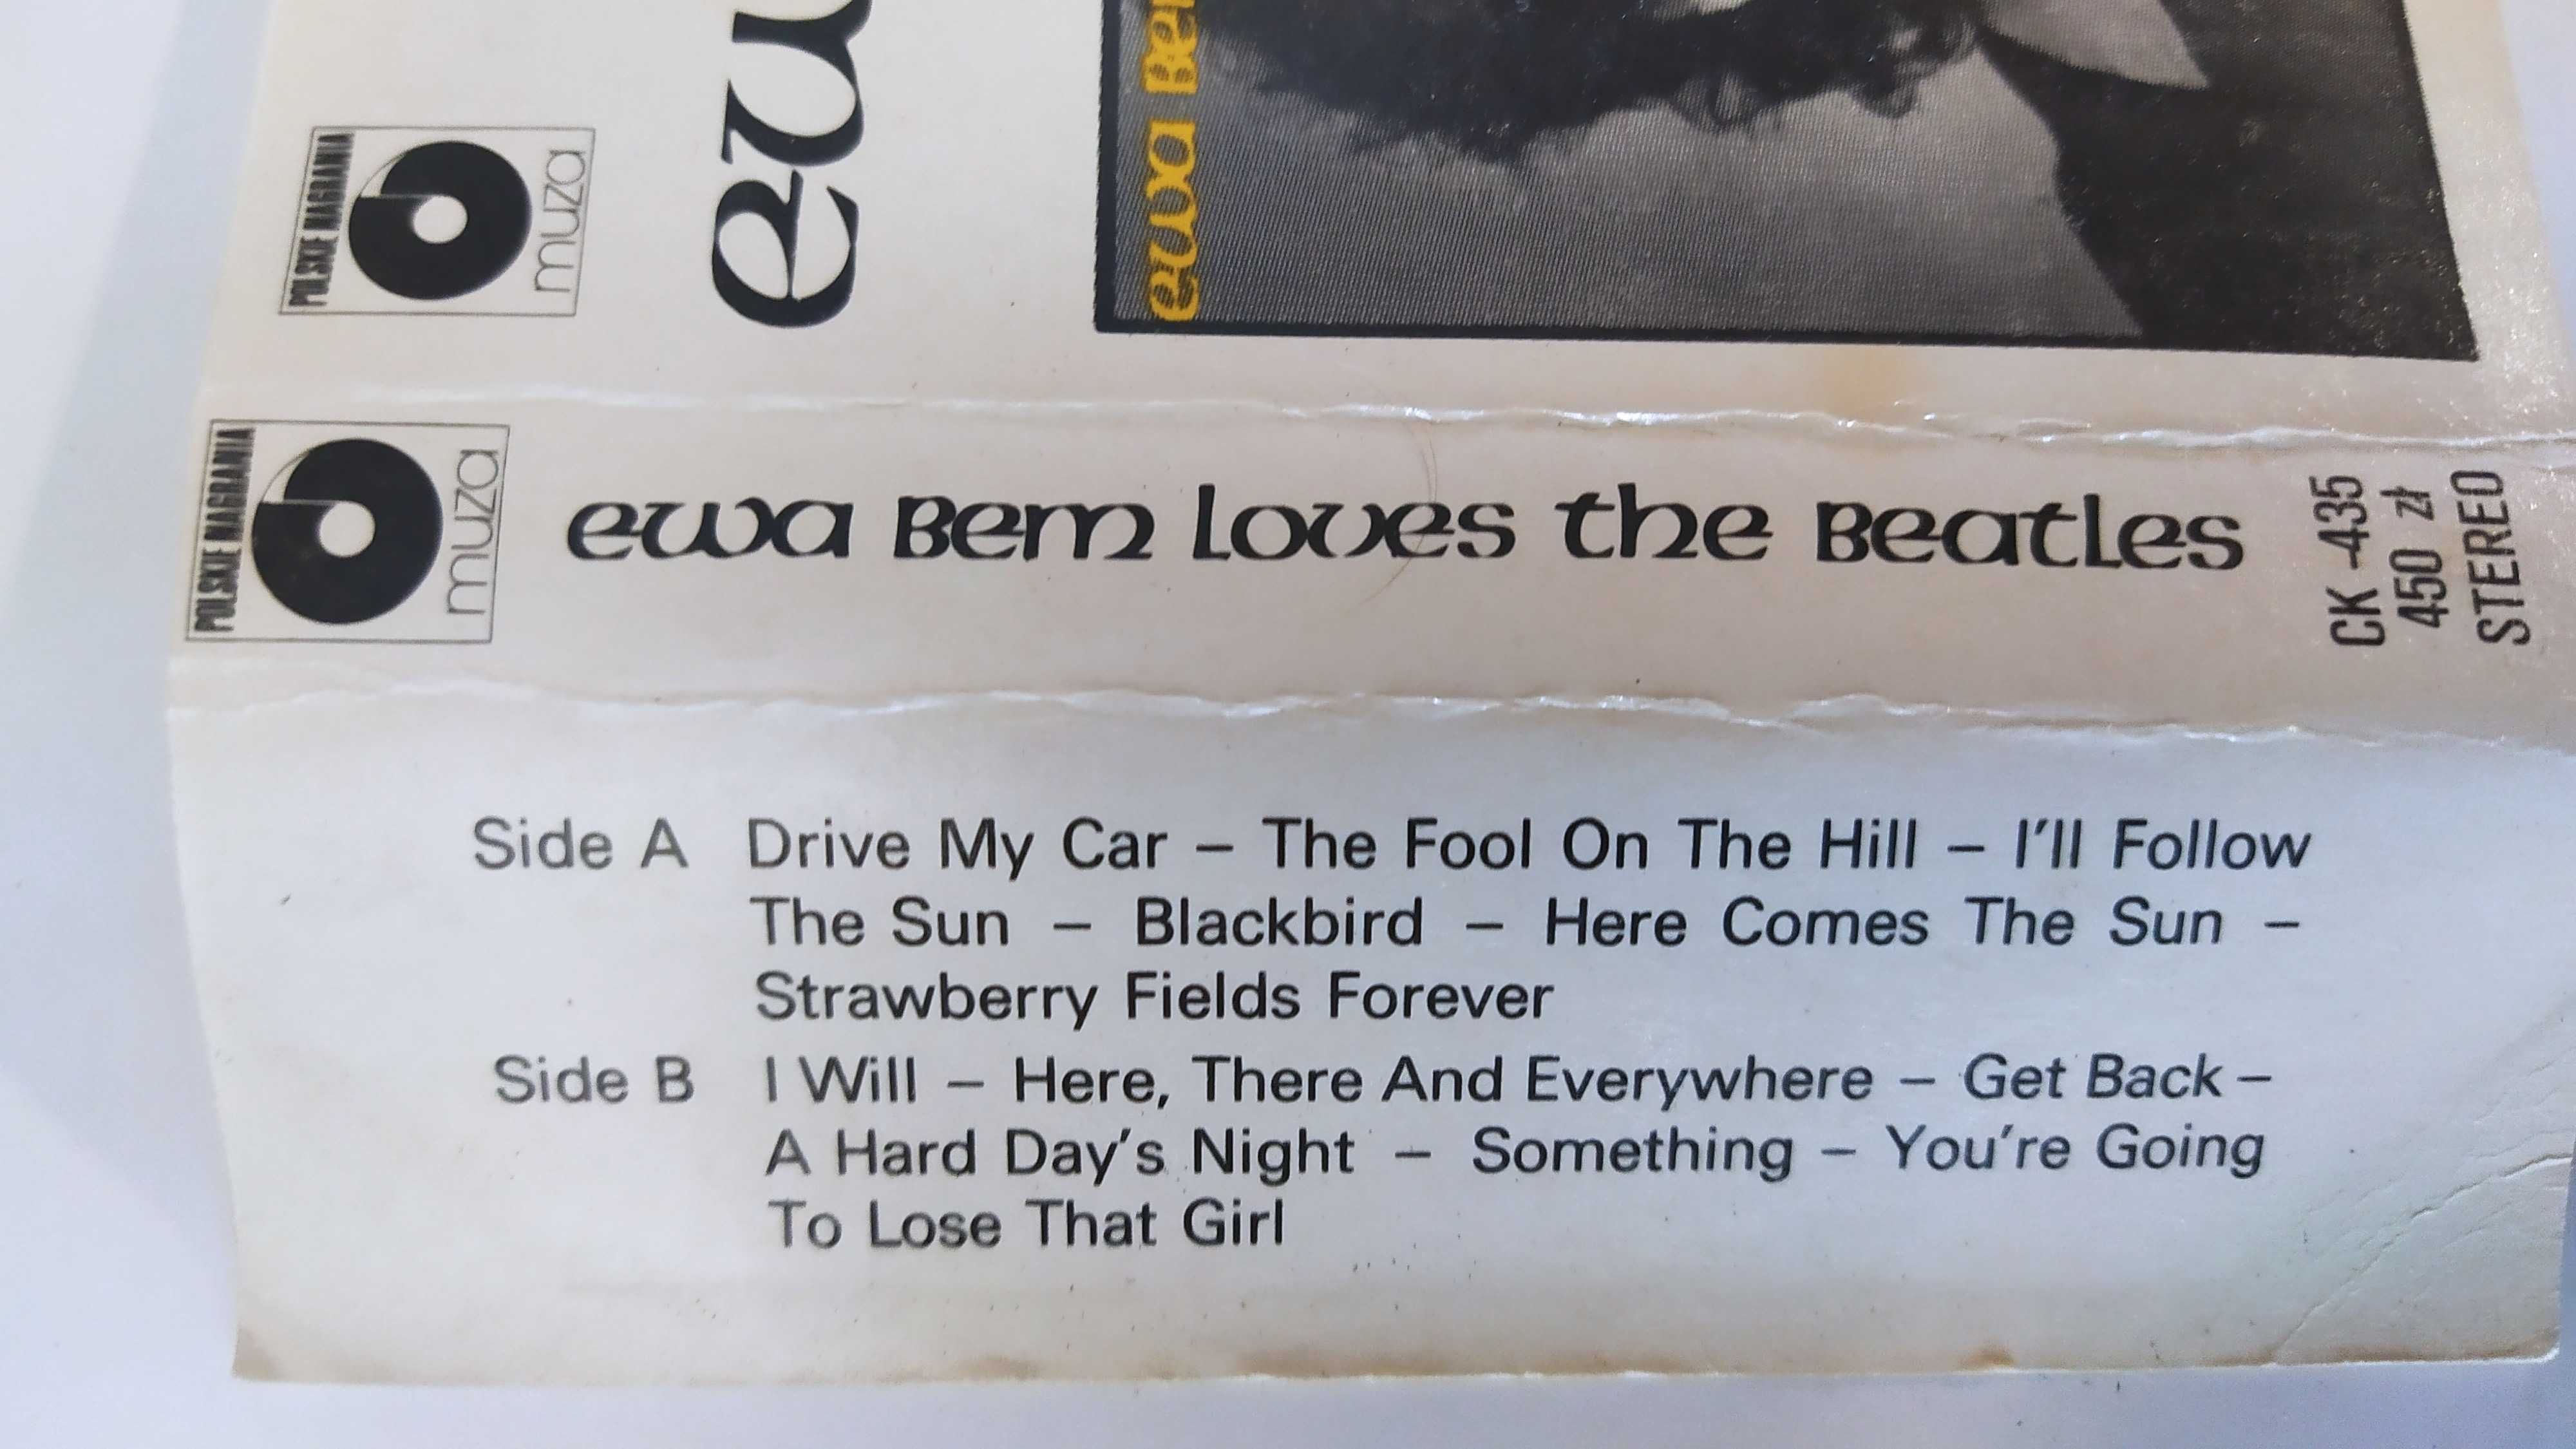 Ewa BEM Loves The Beatles kaseta MC OPIS ważne poligrafia